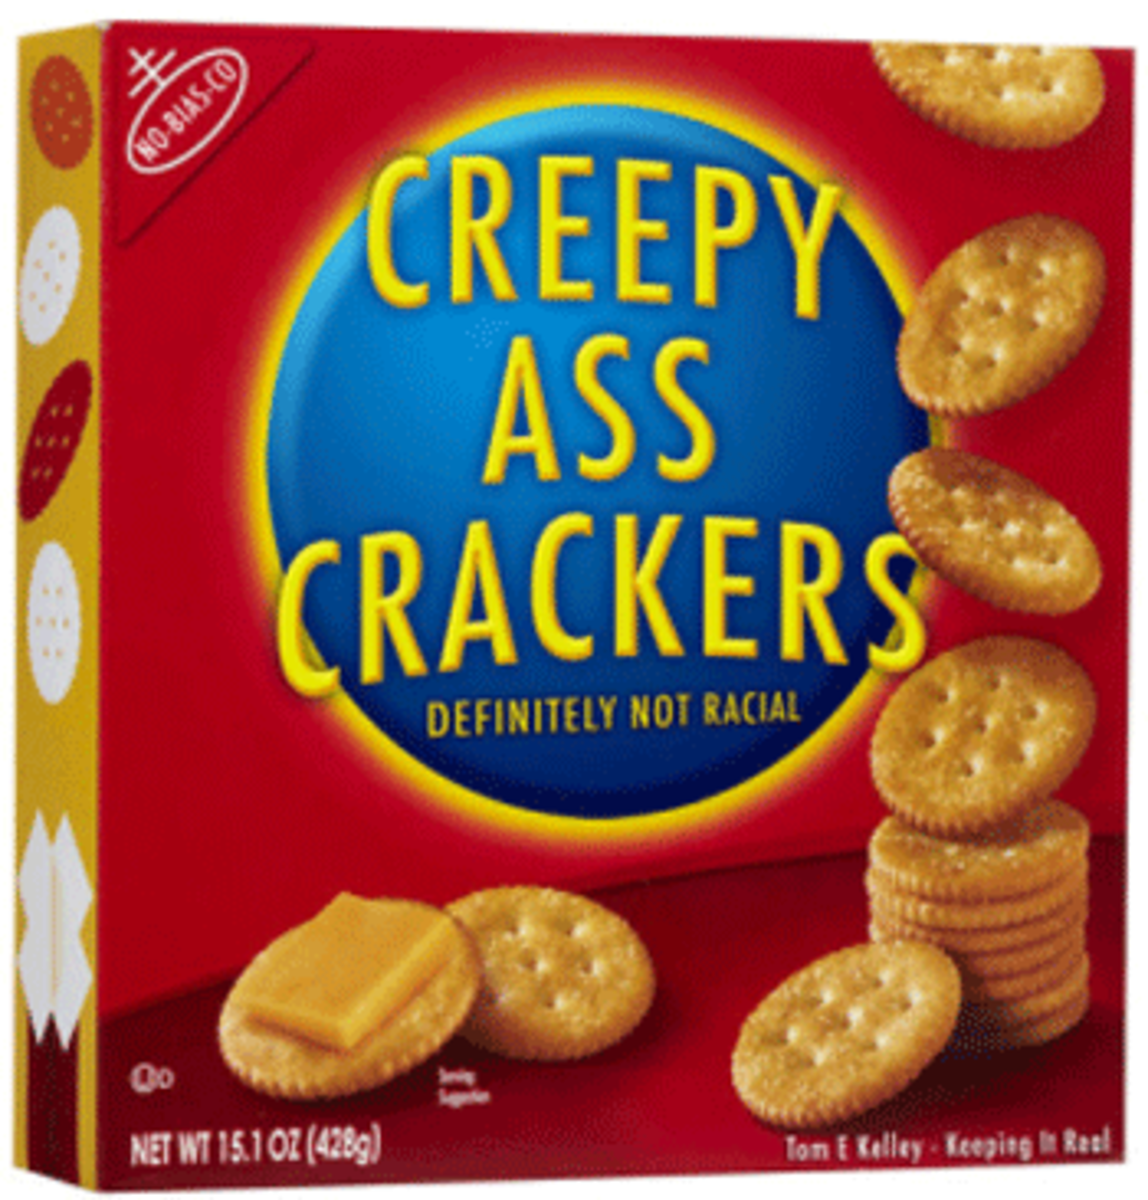 creepy ass crackers